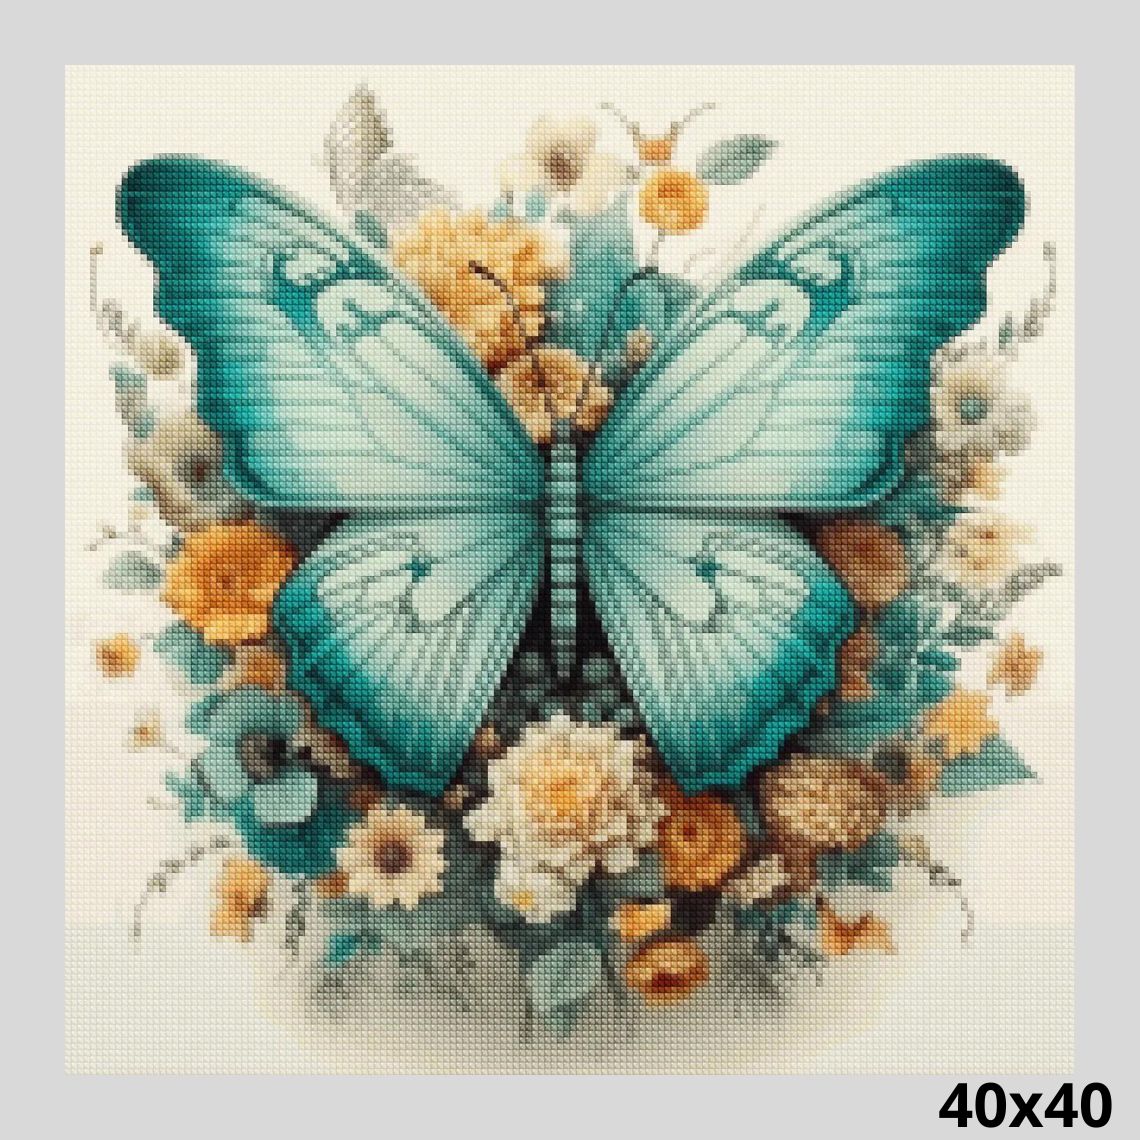 Turquoise Butterfly 40x40 - Diamond Art World